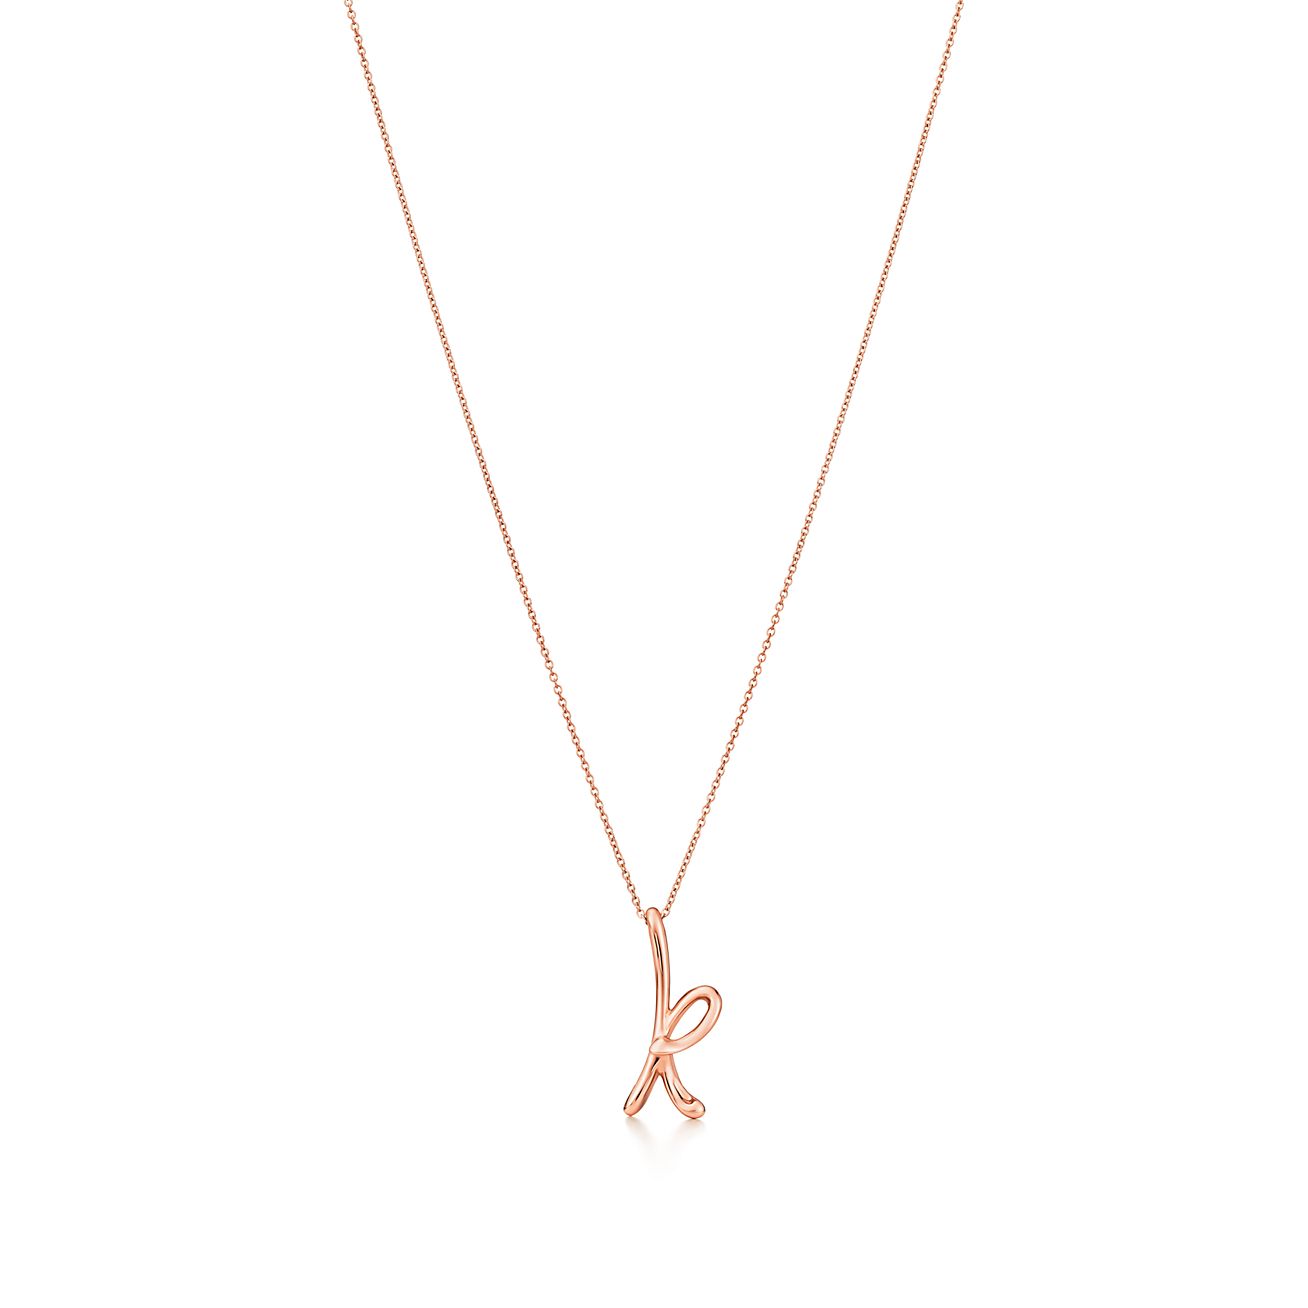 tiffany's elsa peretti alphabet necklace